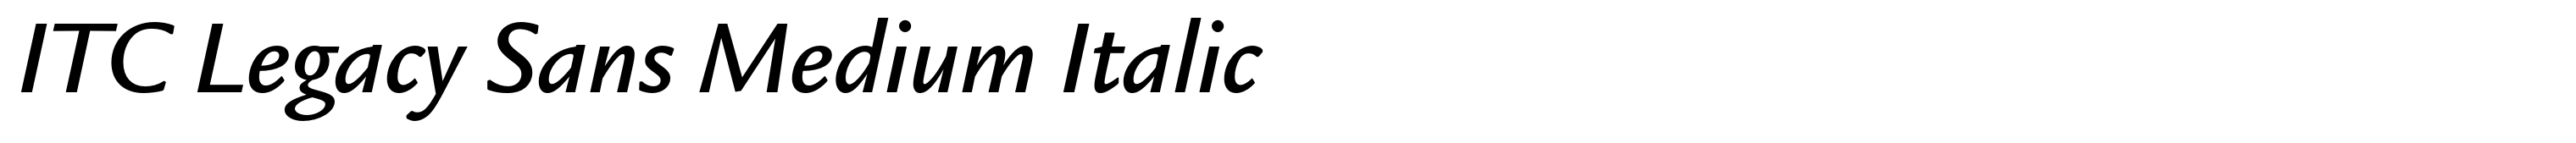 ITC Legacy Sans Medium Italic